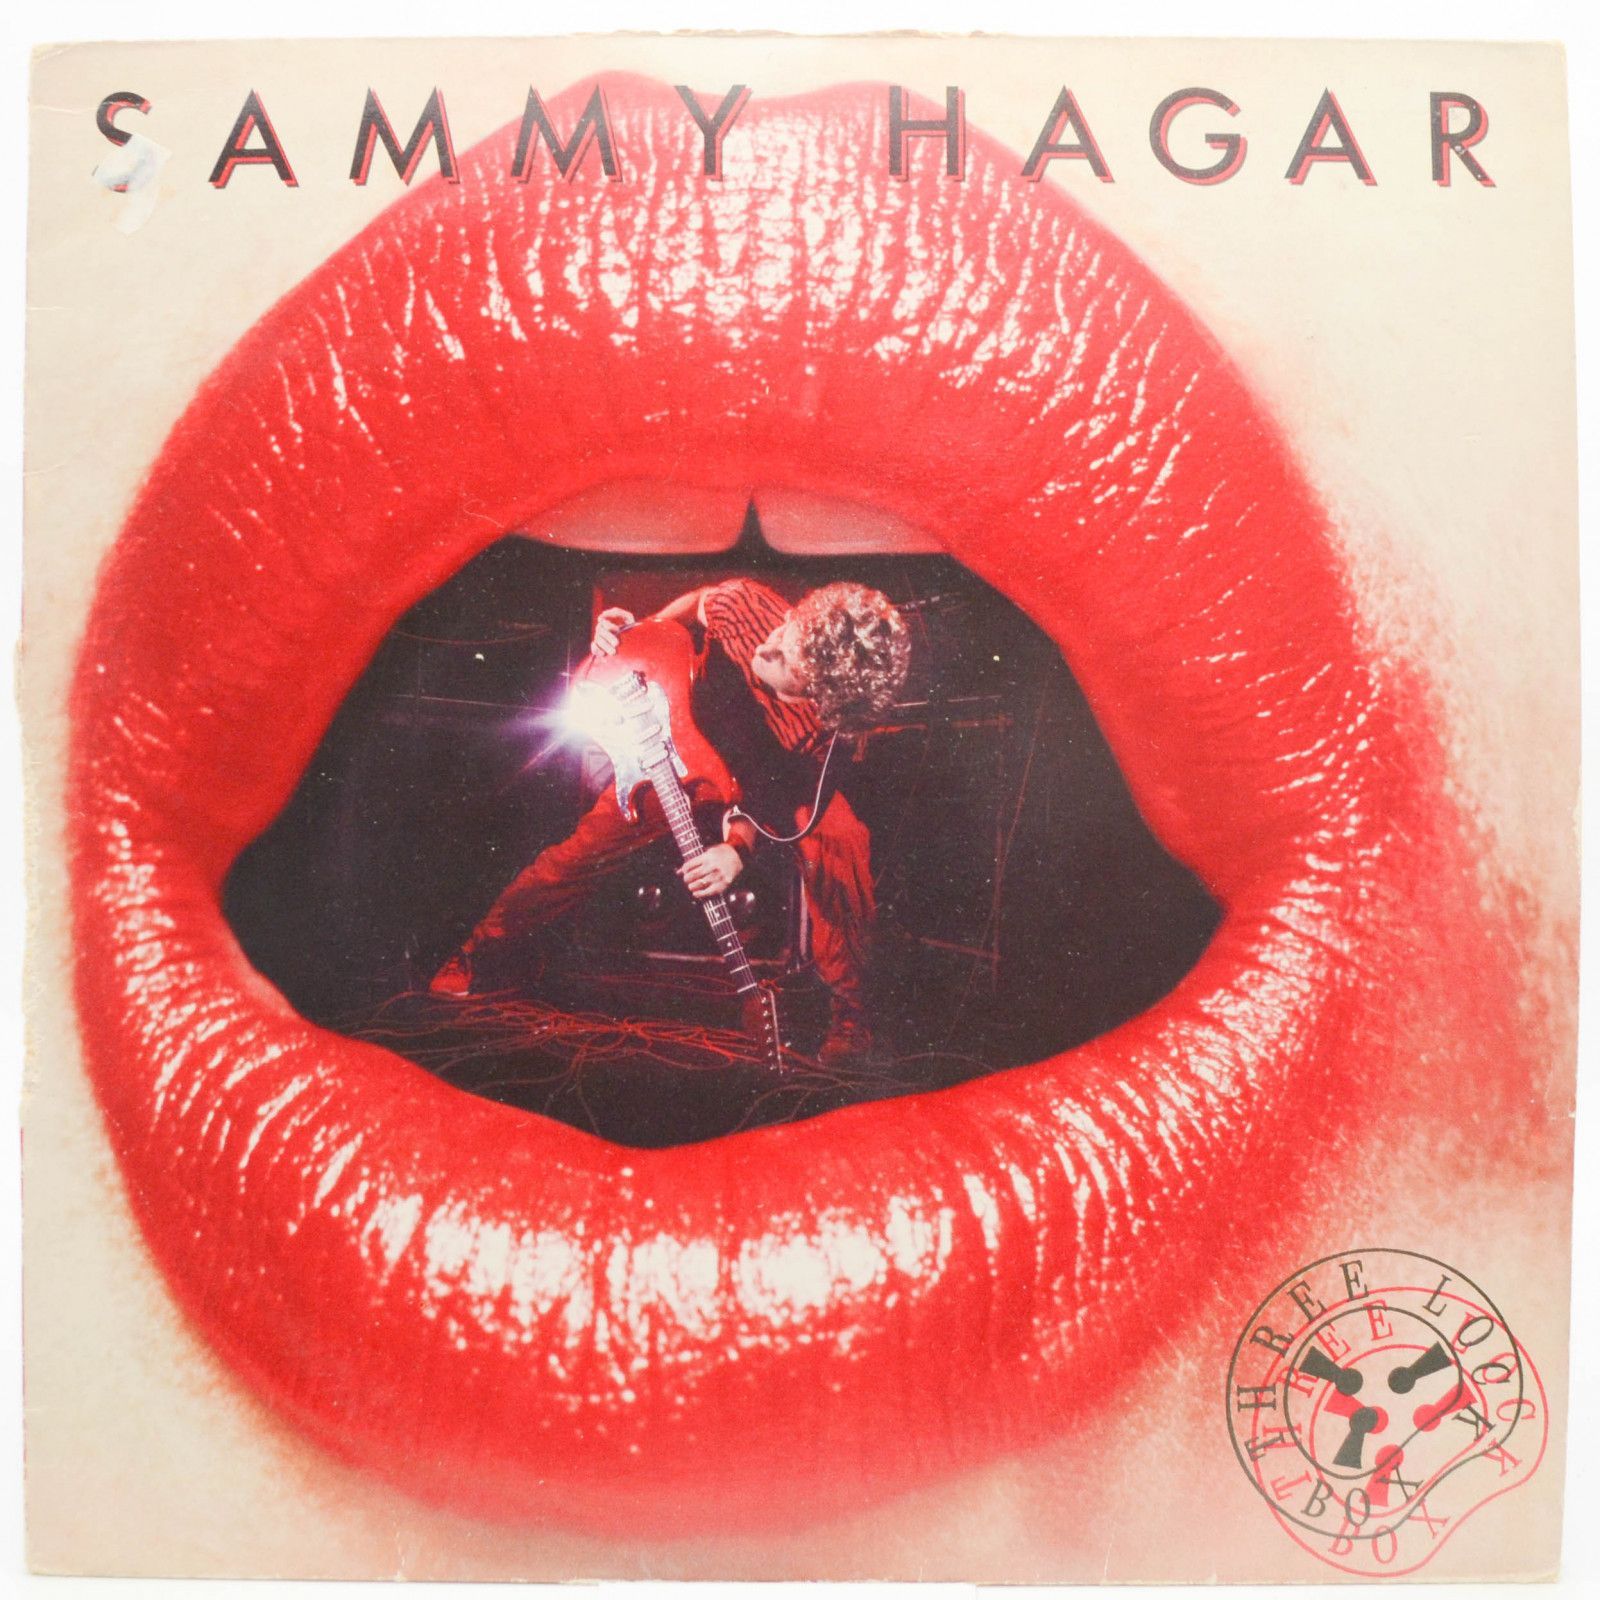 Sammy Hagar — Three Lock Box, 1982